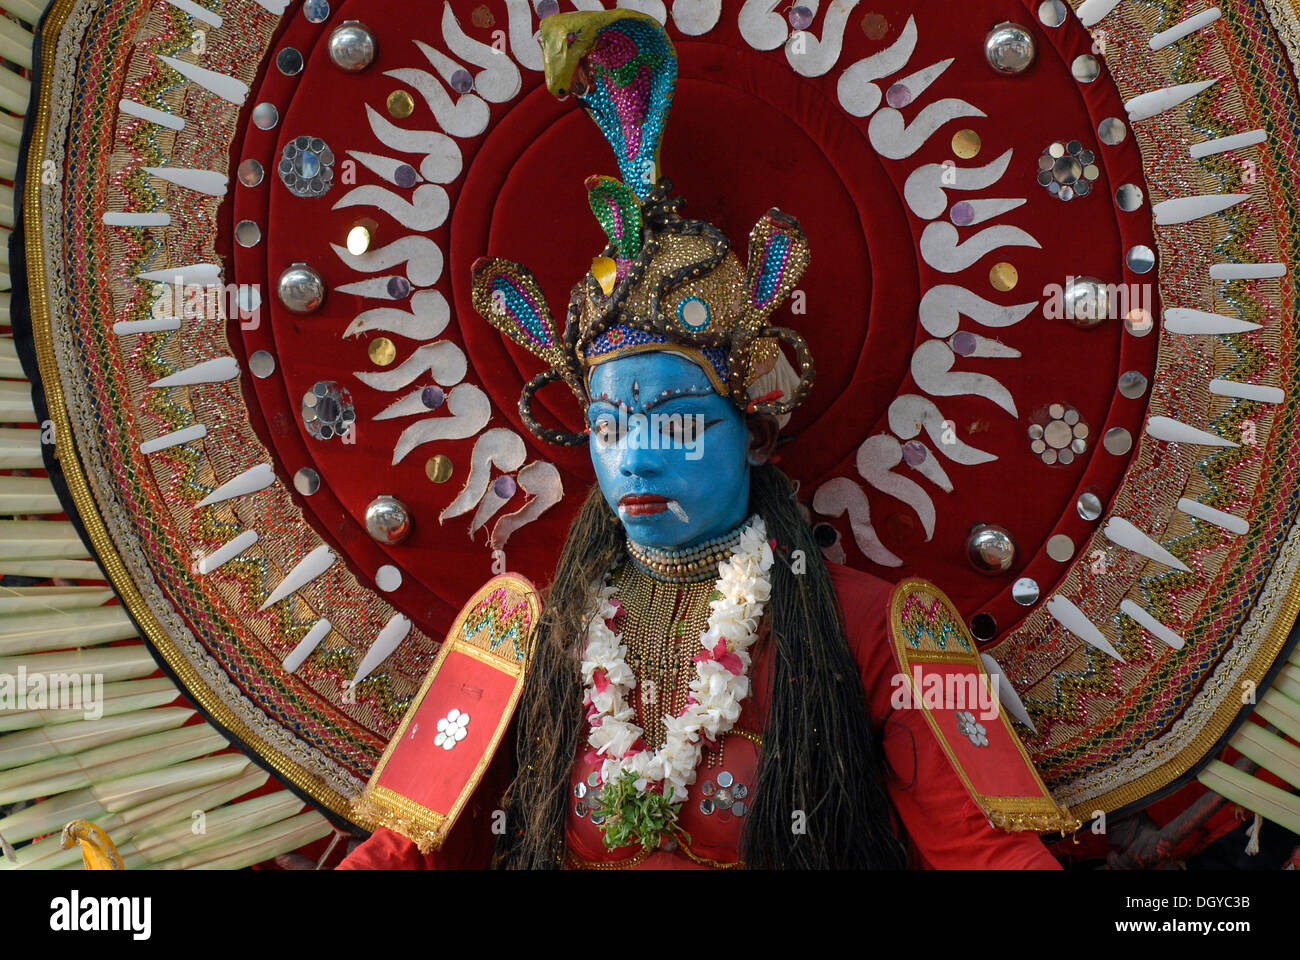 Mann verkleidet als Nilakantha oder Gott Shiva, Varkala, Kerala, Südindien, Indien, Asien Stockfoto